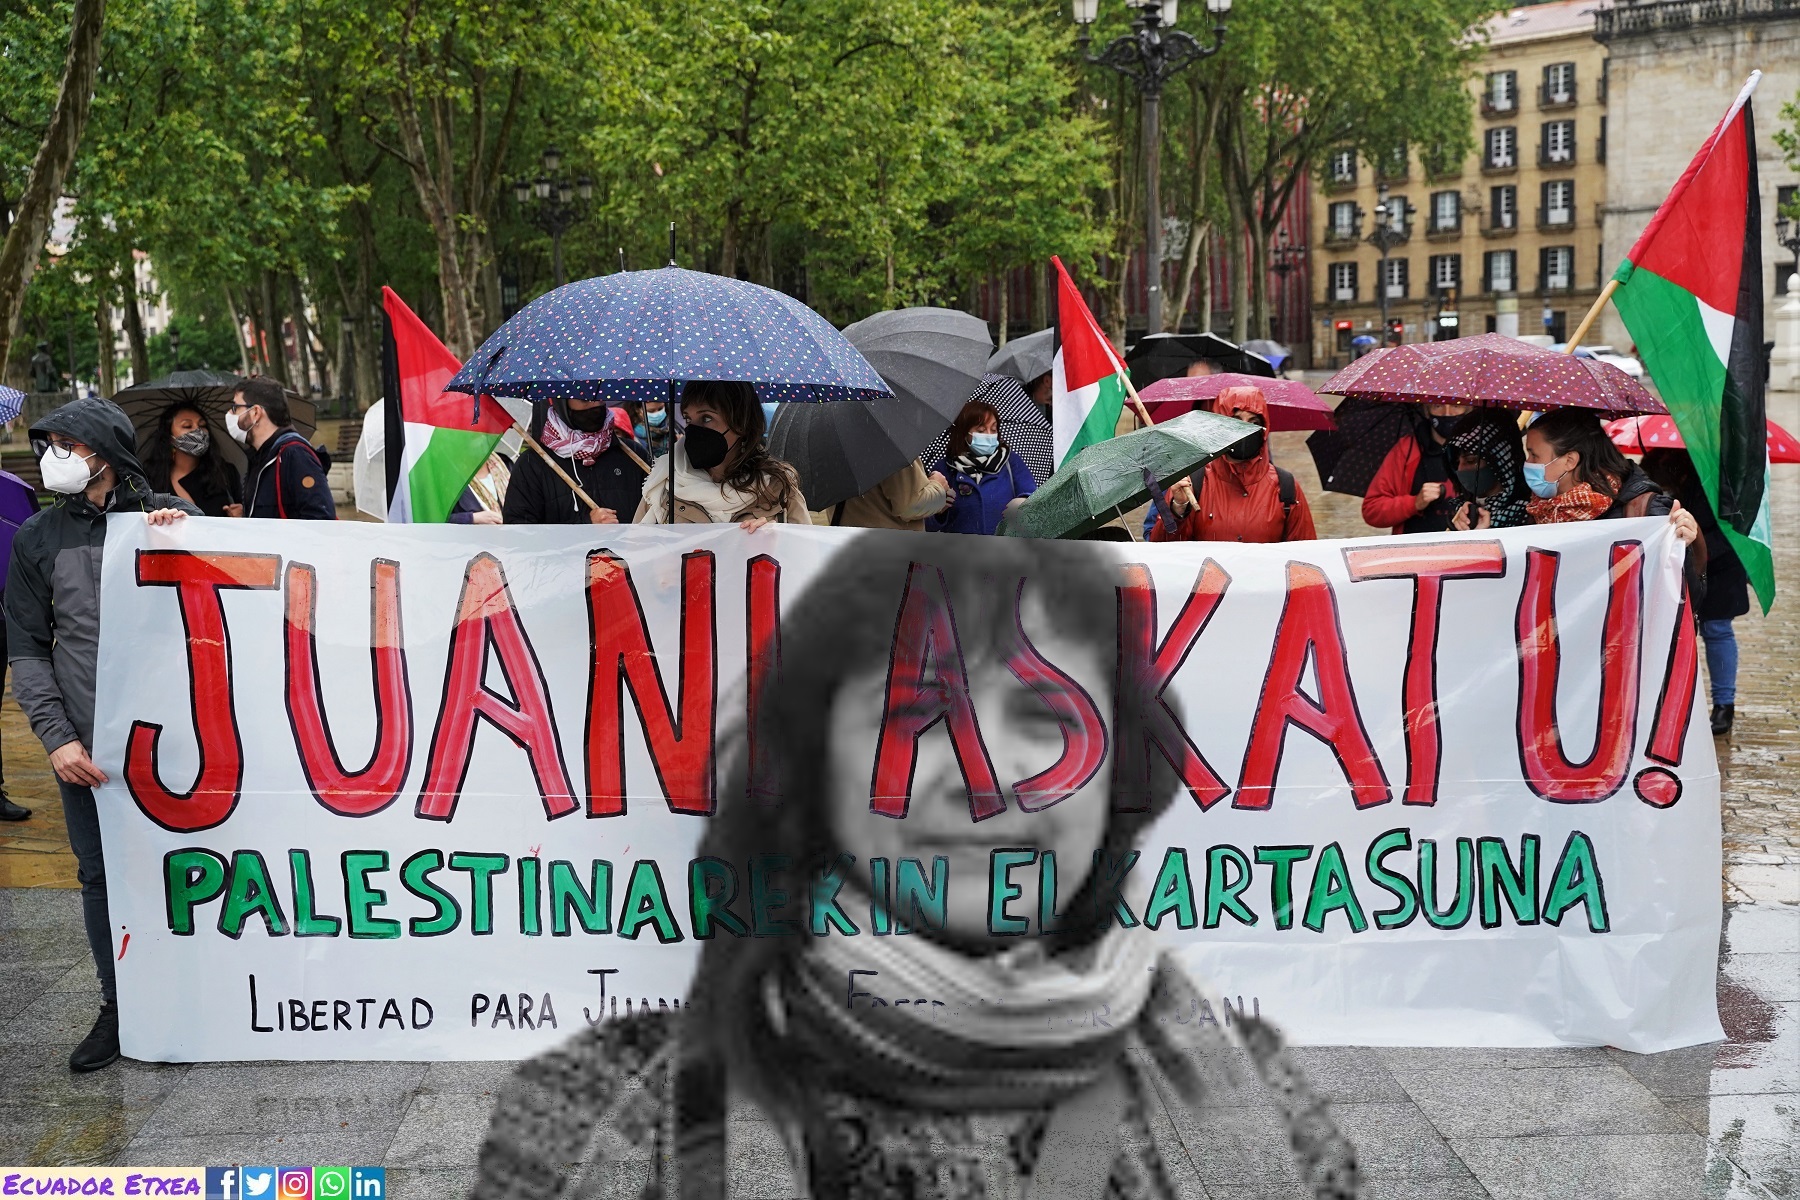 juani-juana-ruiz-sánchez-freedom-Solidaridad-internacionalista-vasca-libertad-palestina-israel-bilbao